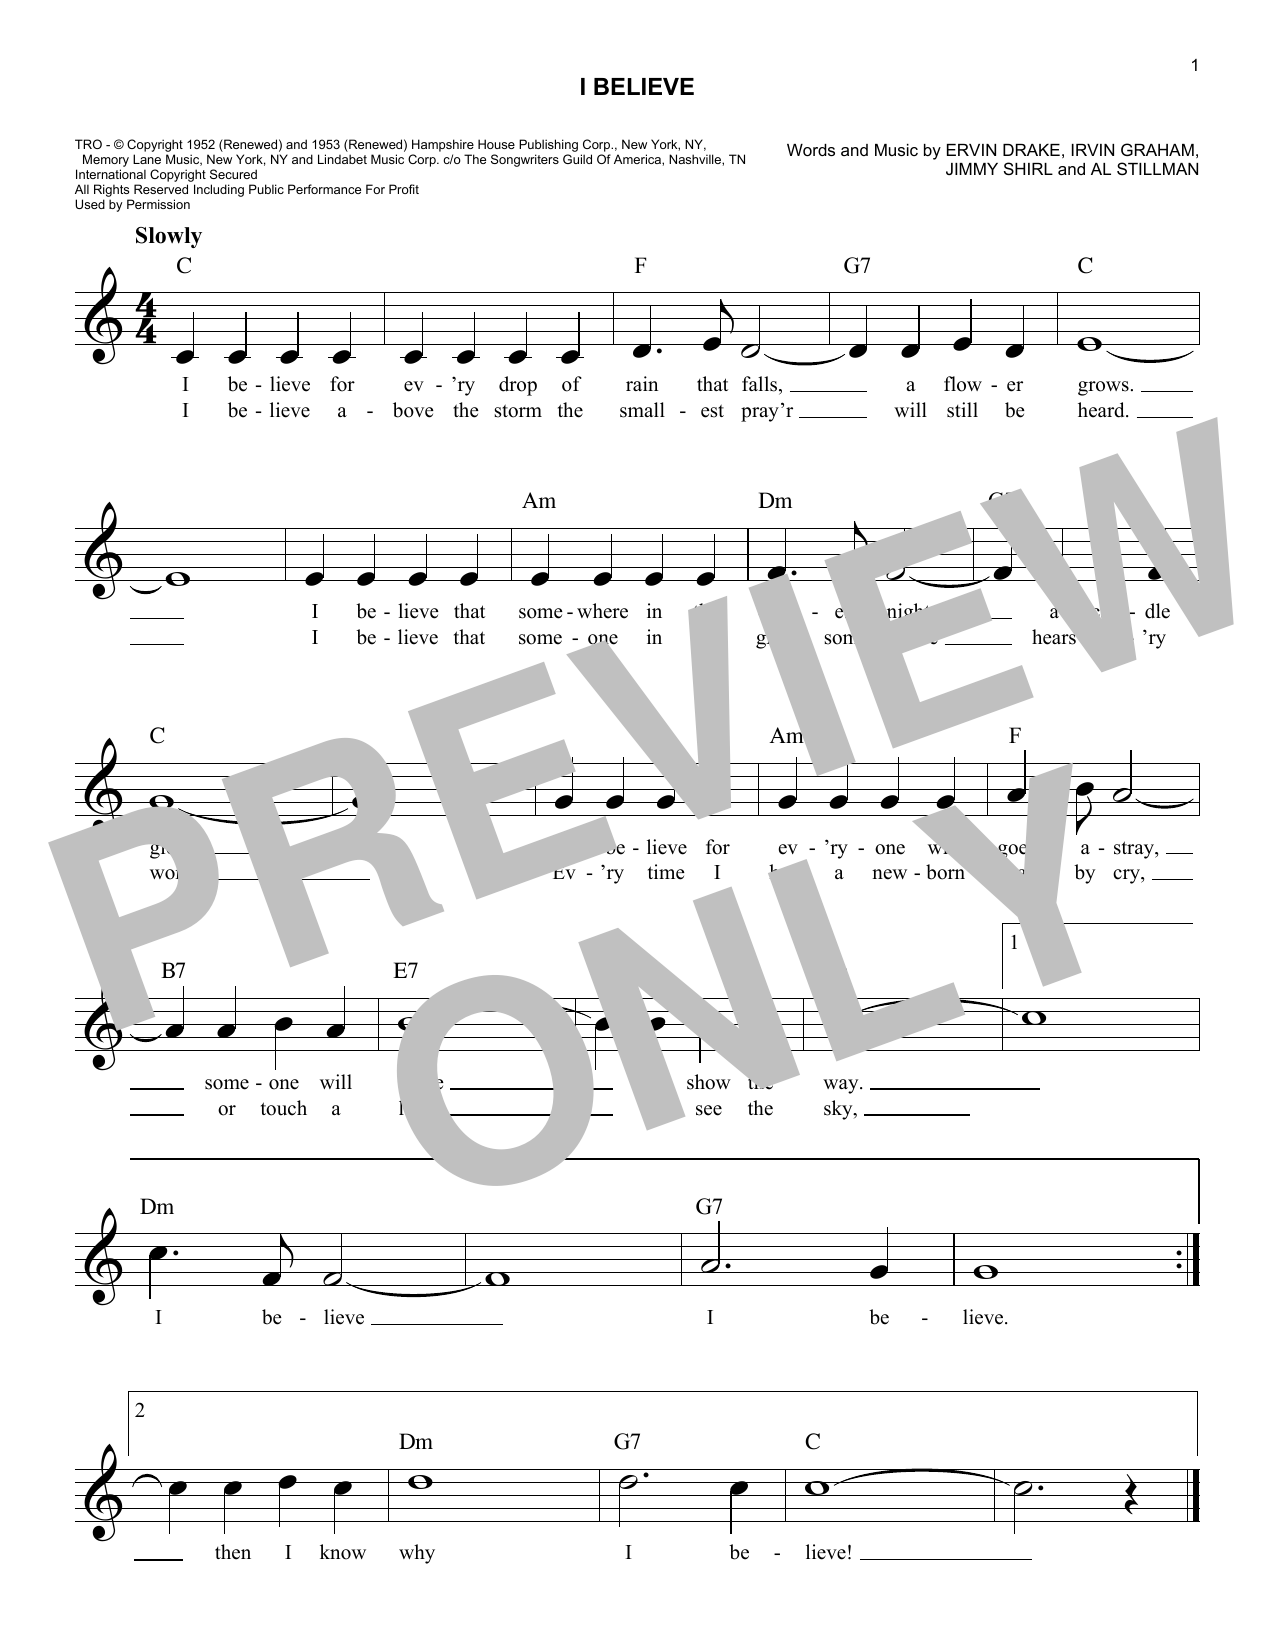 Ervin Drake, Irvin Graham, Jimmy Shirl and Al Stillman I Believe Sheet Music Notes & Chords for Lead Sheet / Fake Book - Download or Print PDF